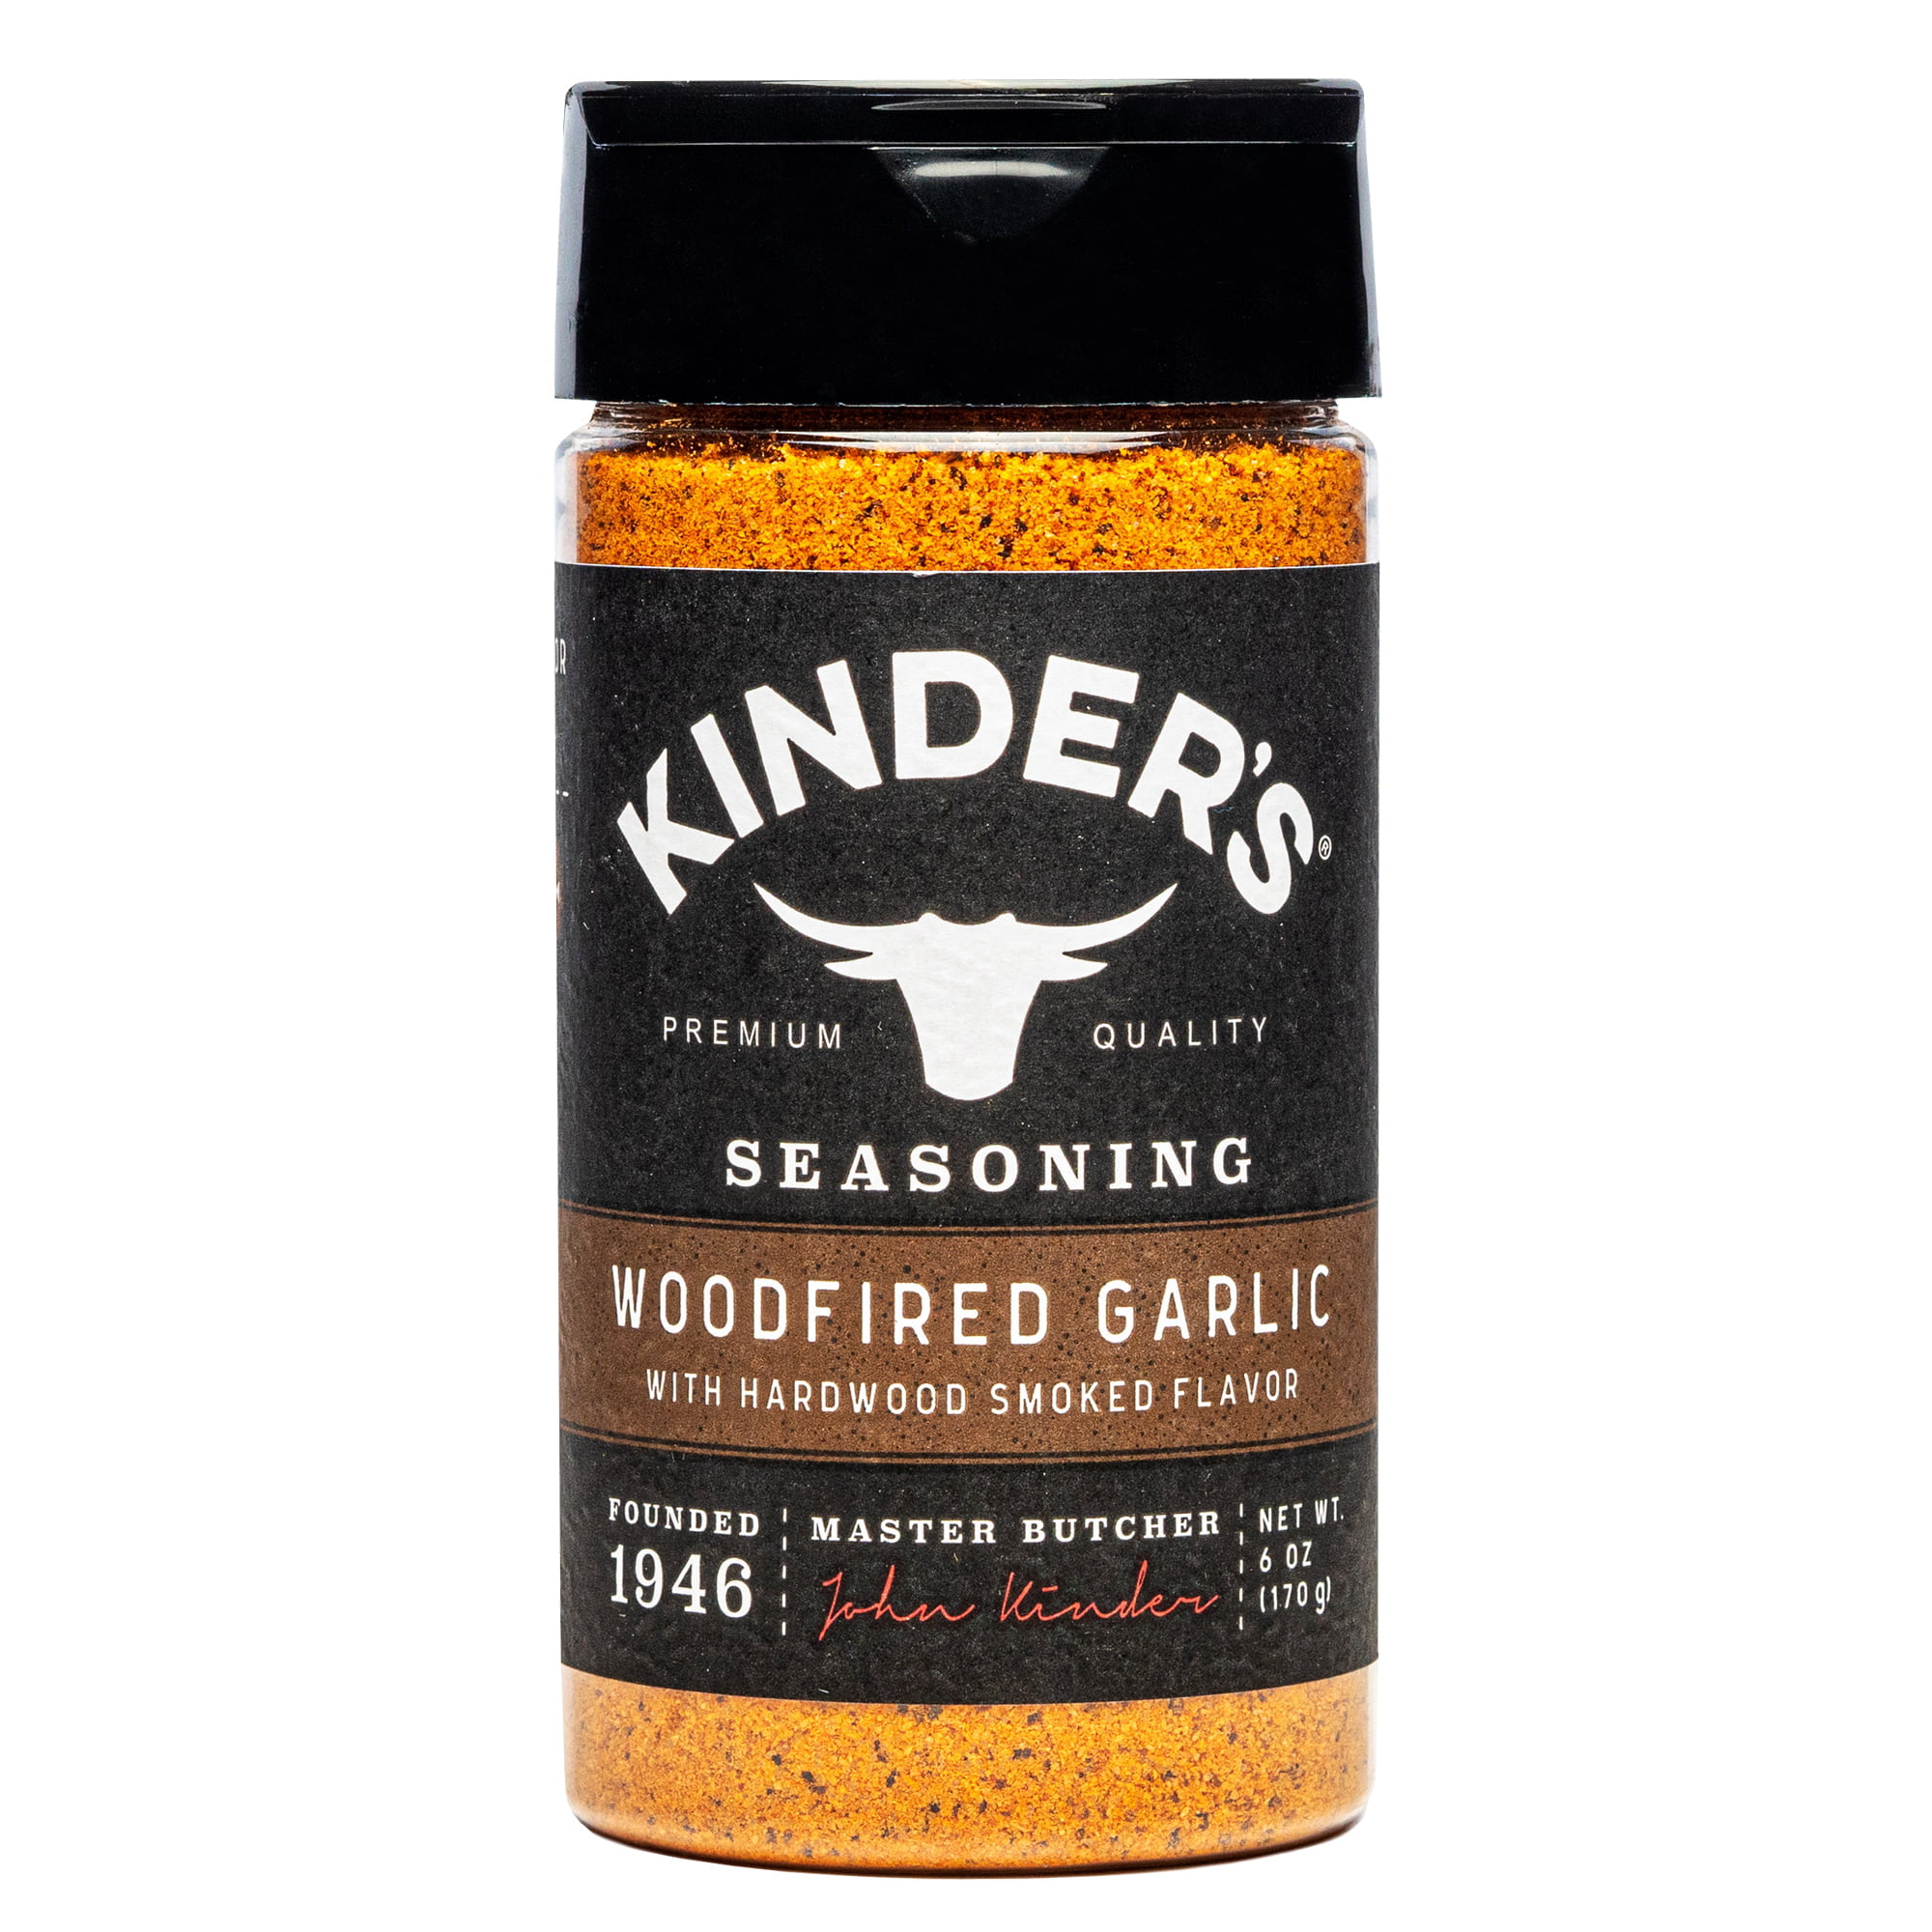 Kinder's Taco Seasoning Woodfired Garlic Seasoning with Hardwood Smoked Flavors, 6 oz.